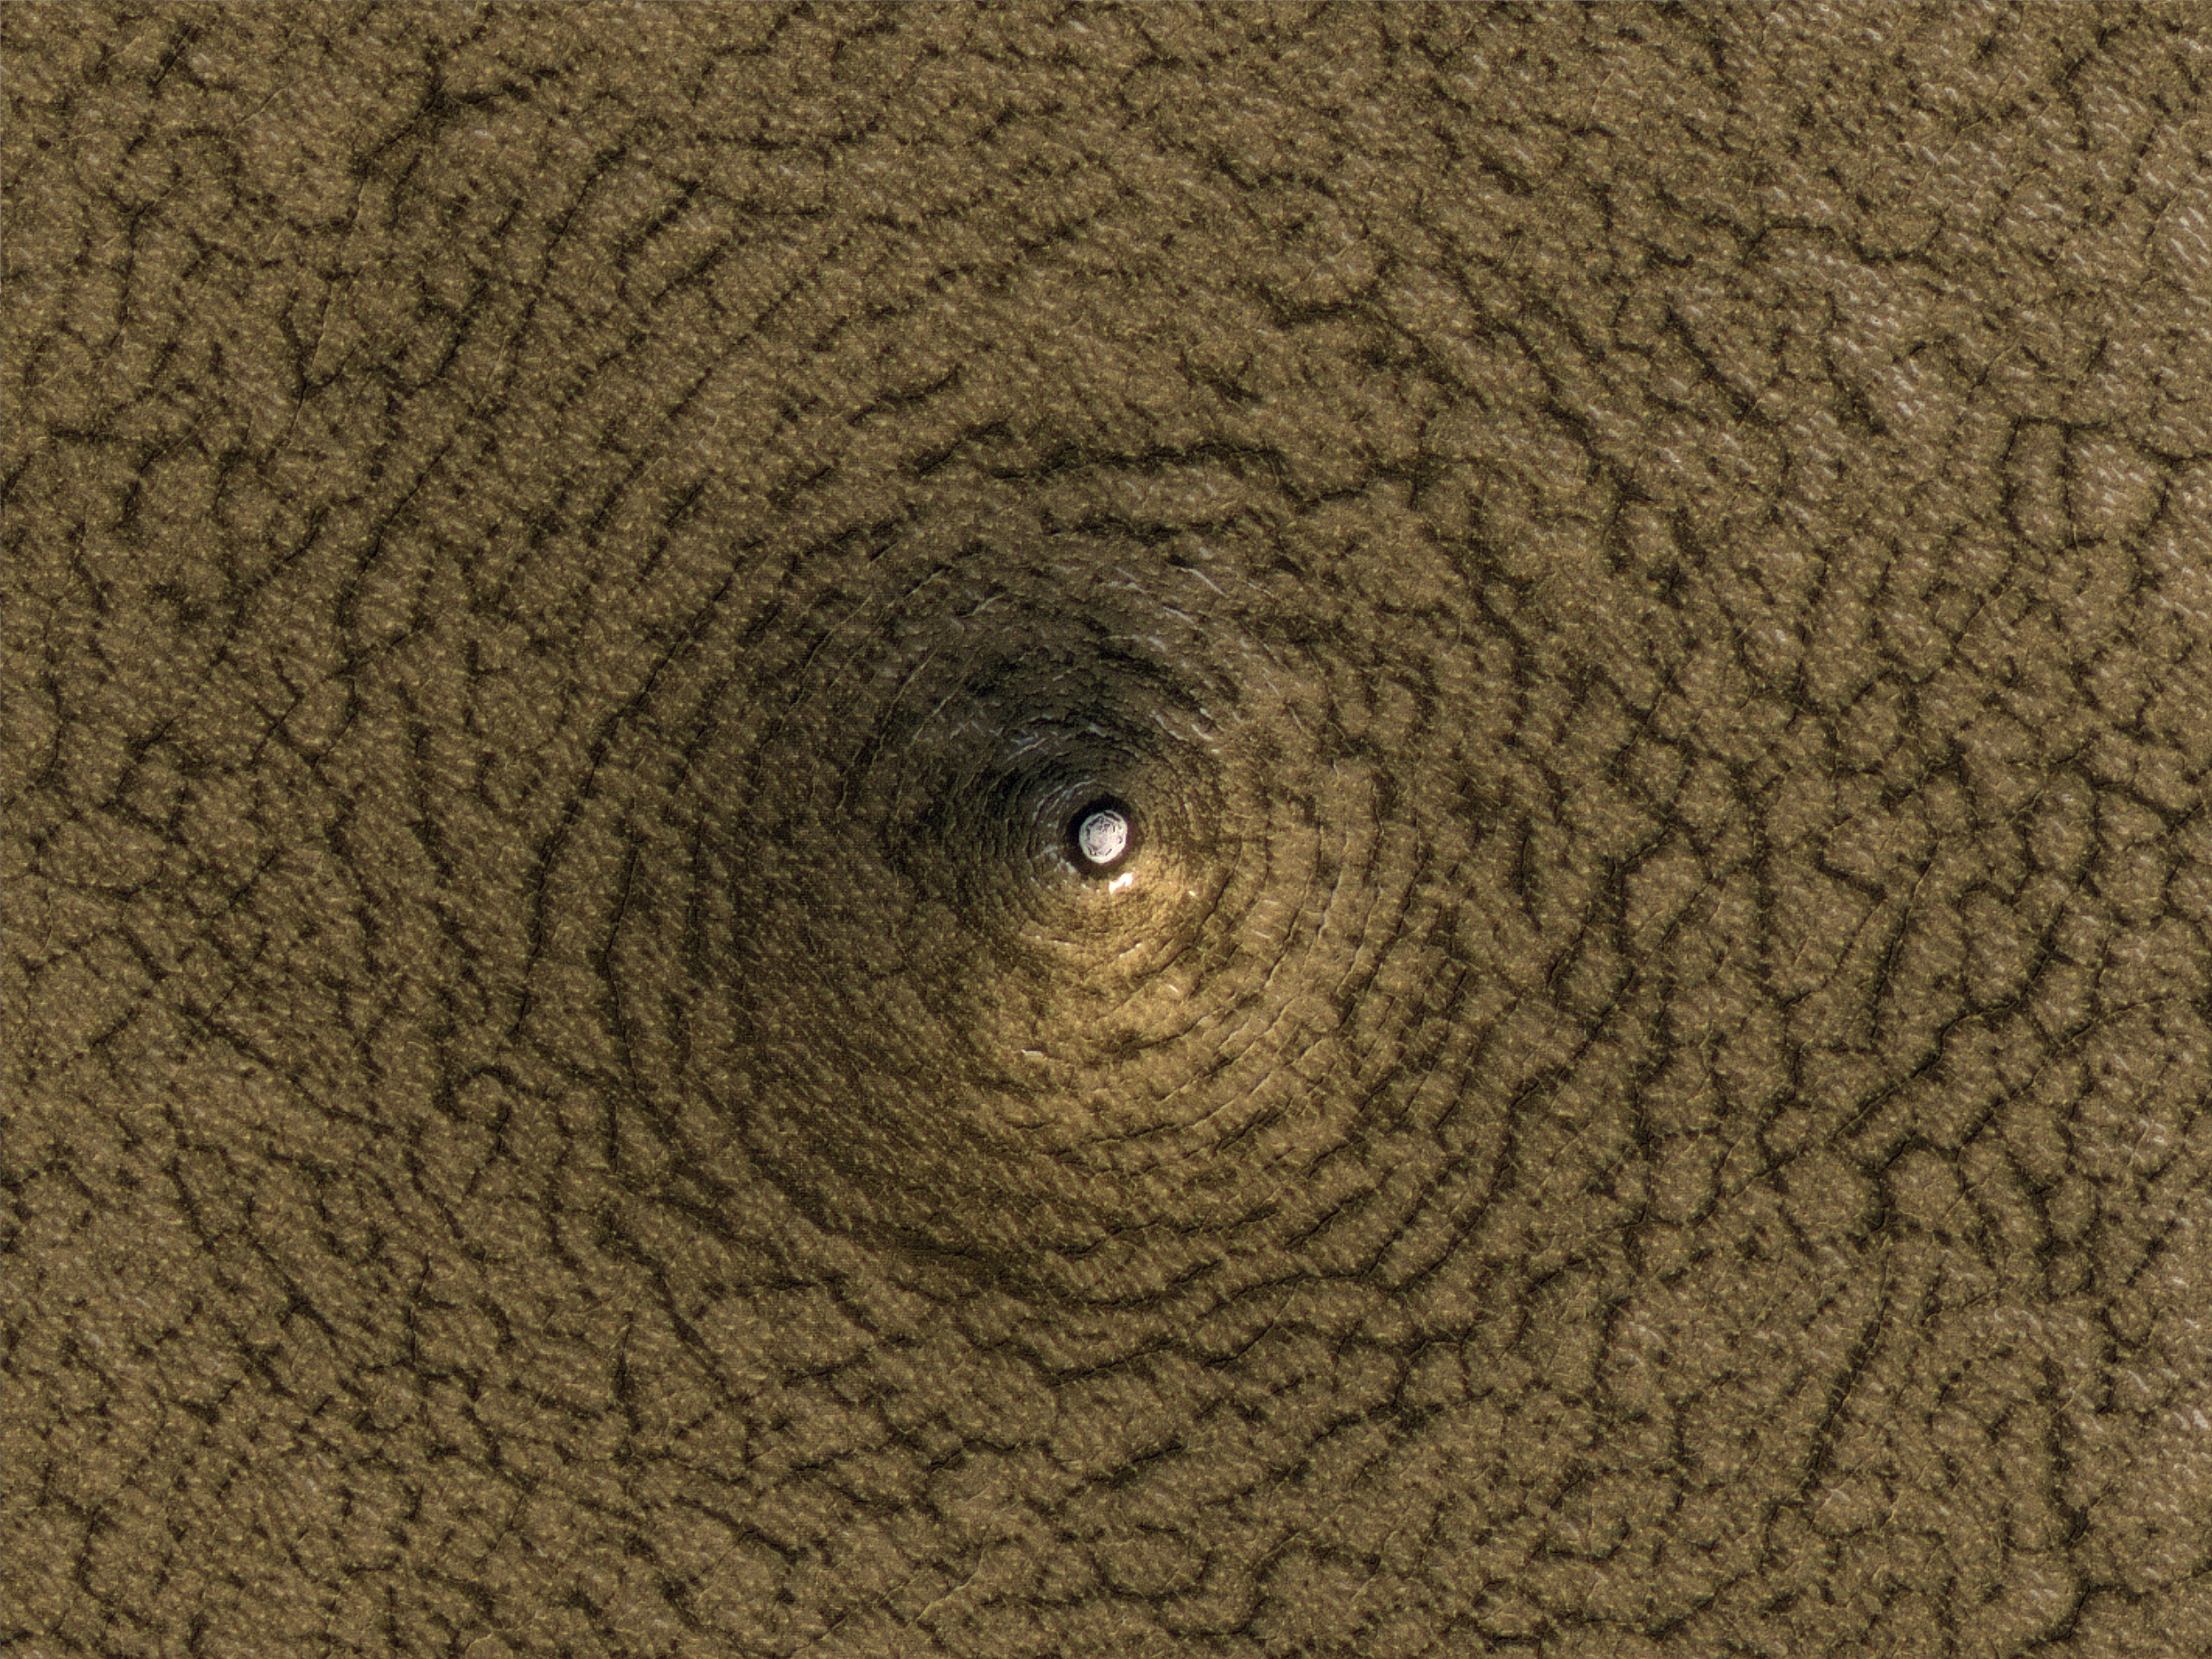 NASA's HiRISE camera captures this strange pit on Mars | See pic